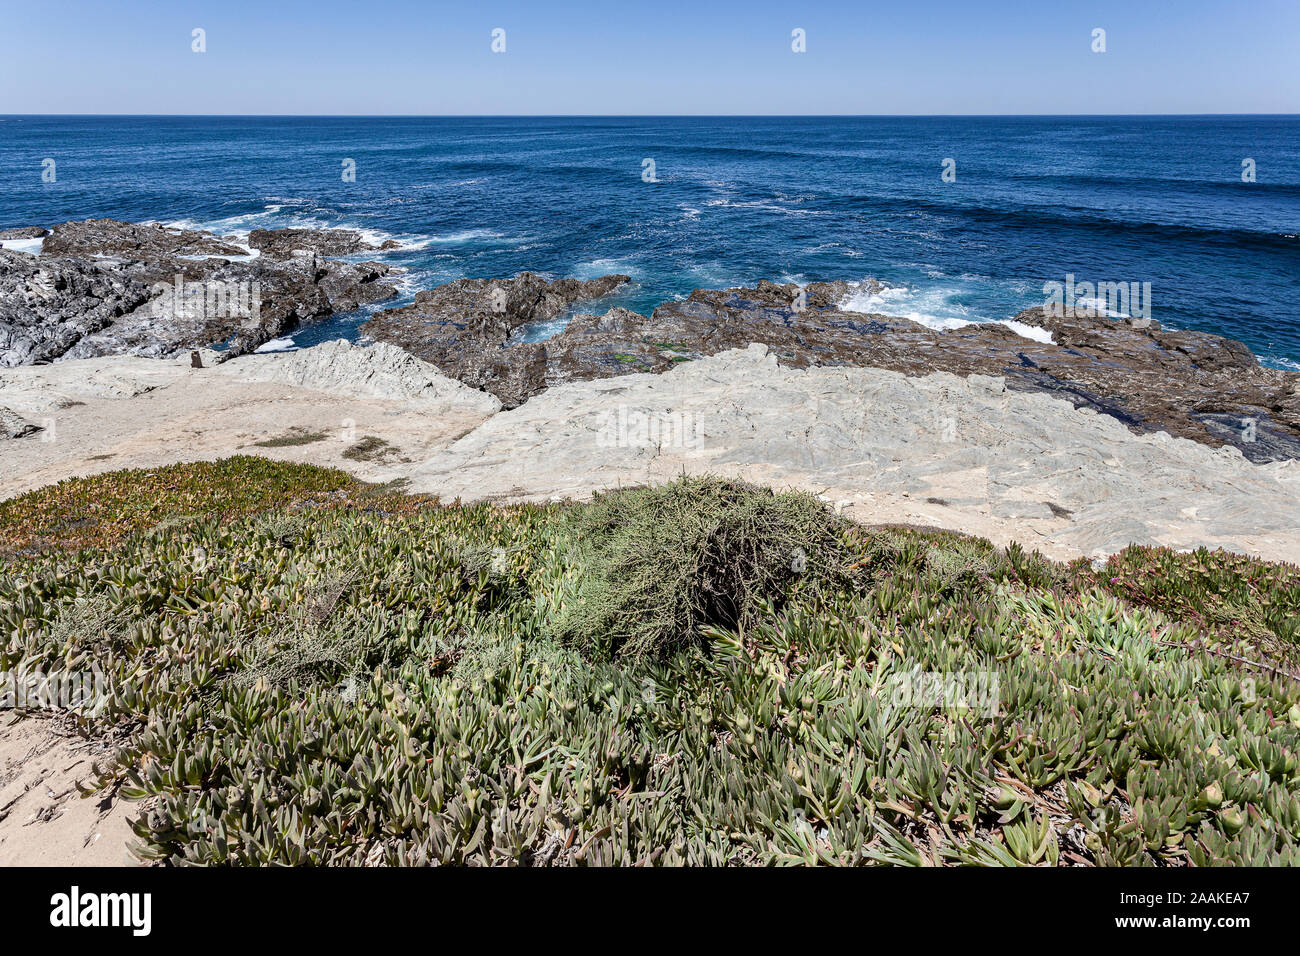 Rocks where sea waves break, thus protecting the coastal vegetation. Stock Photo